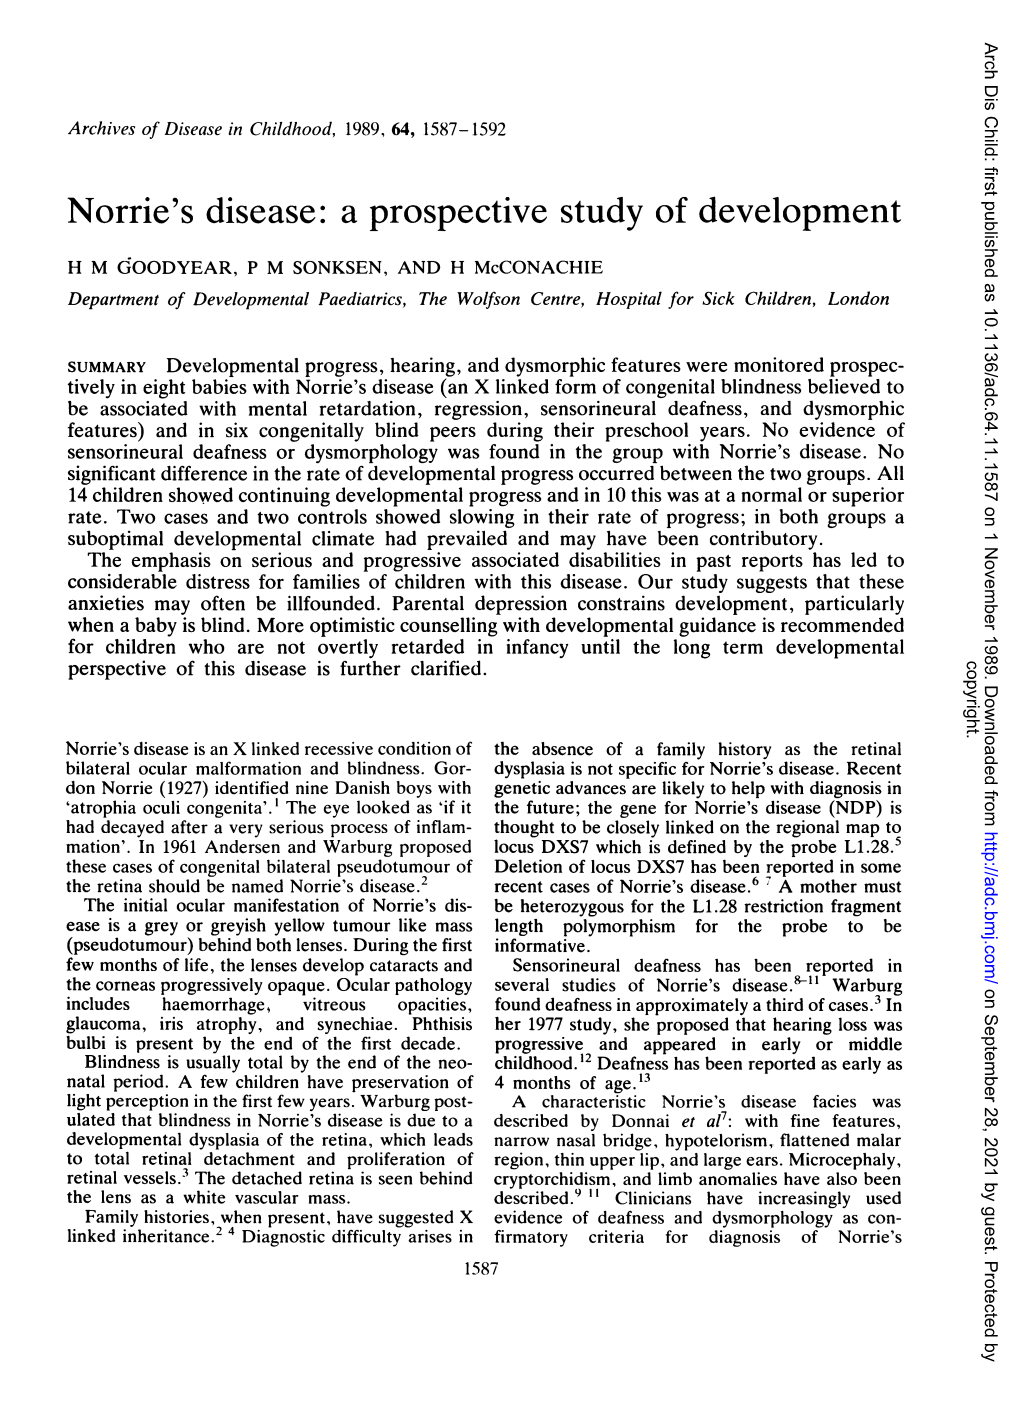 Norrie's Disease: a Prospective Study of Development